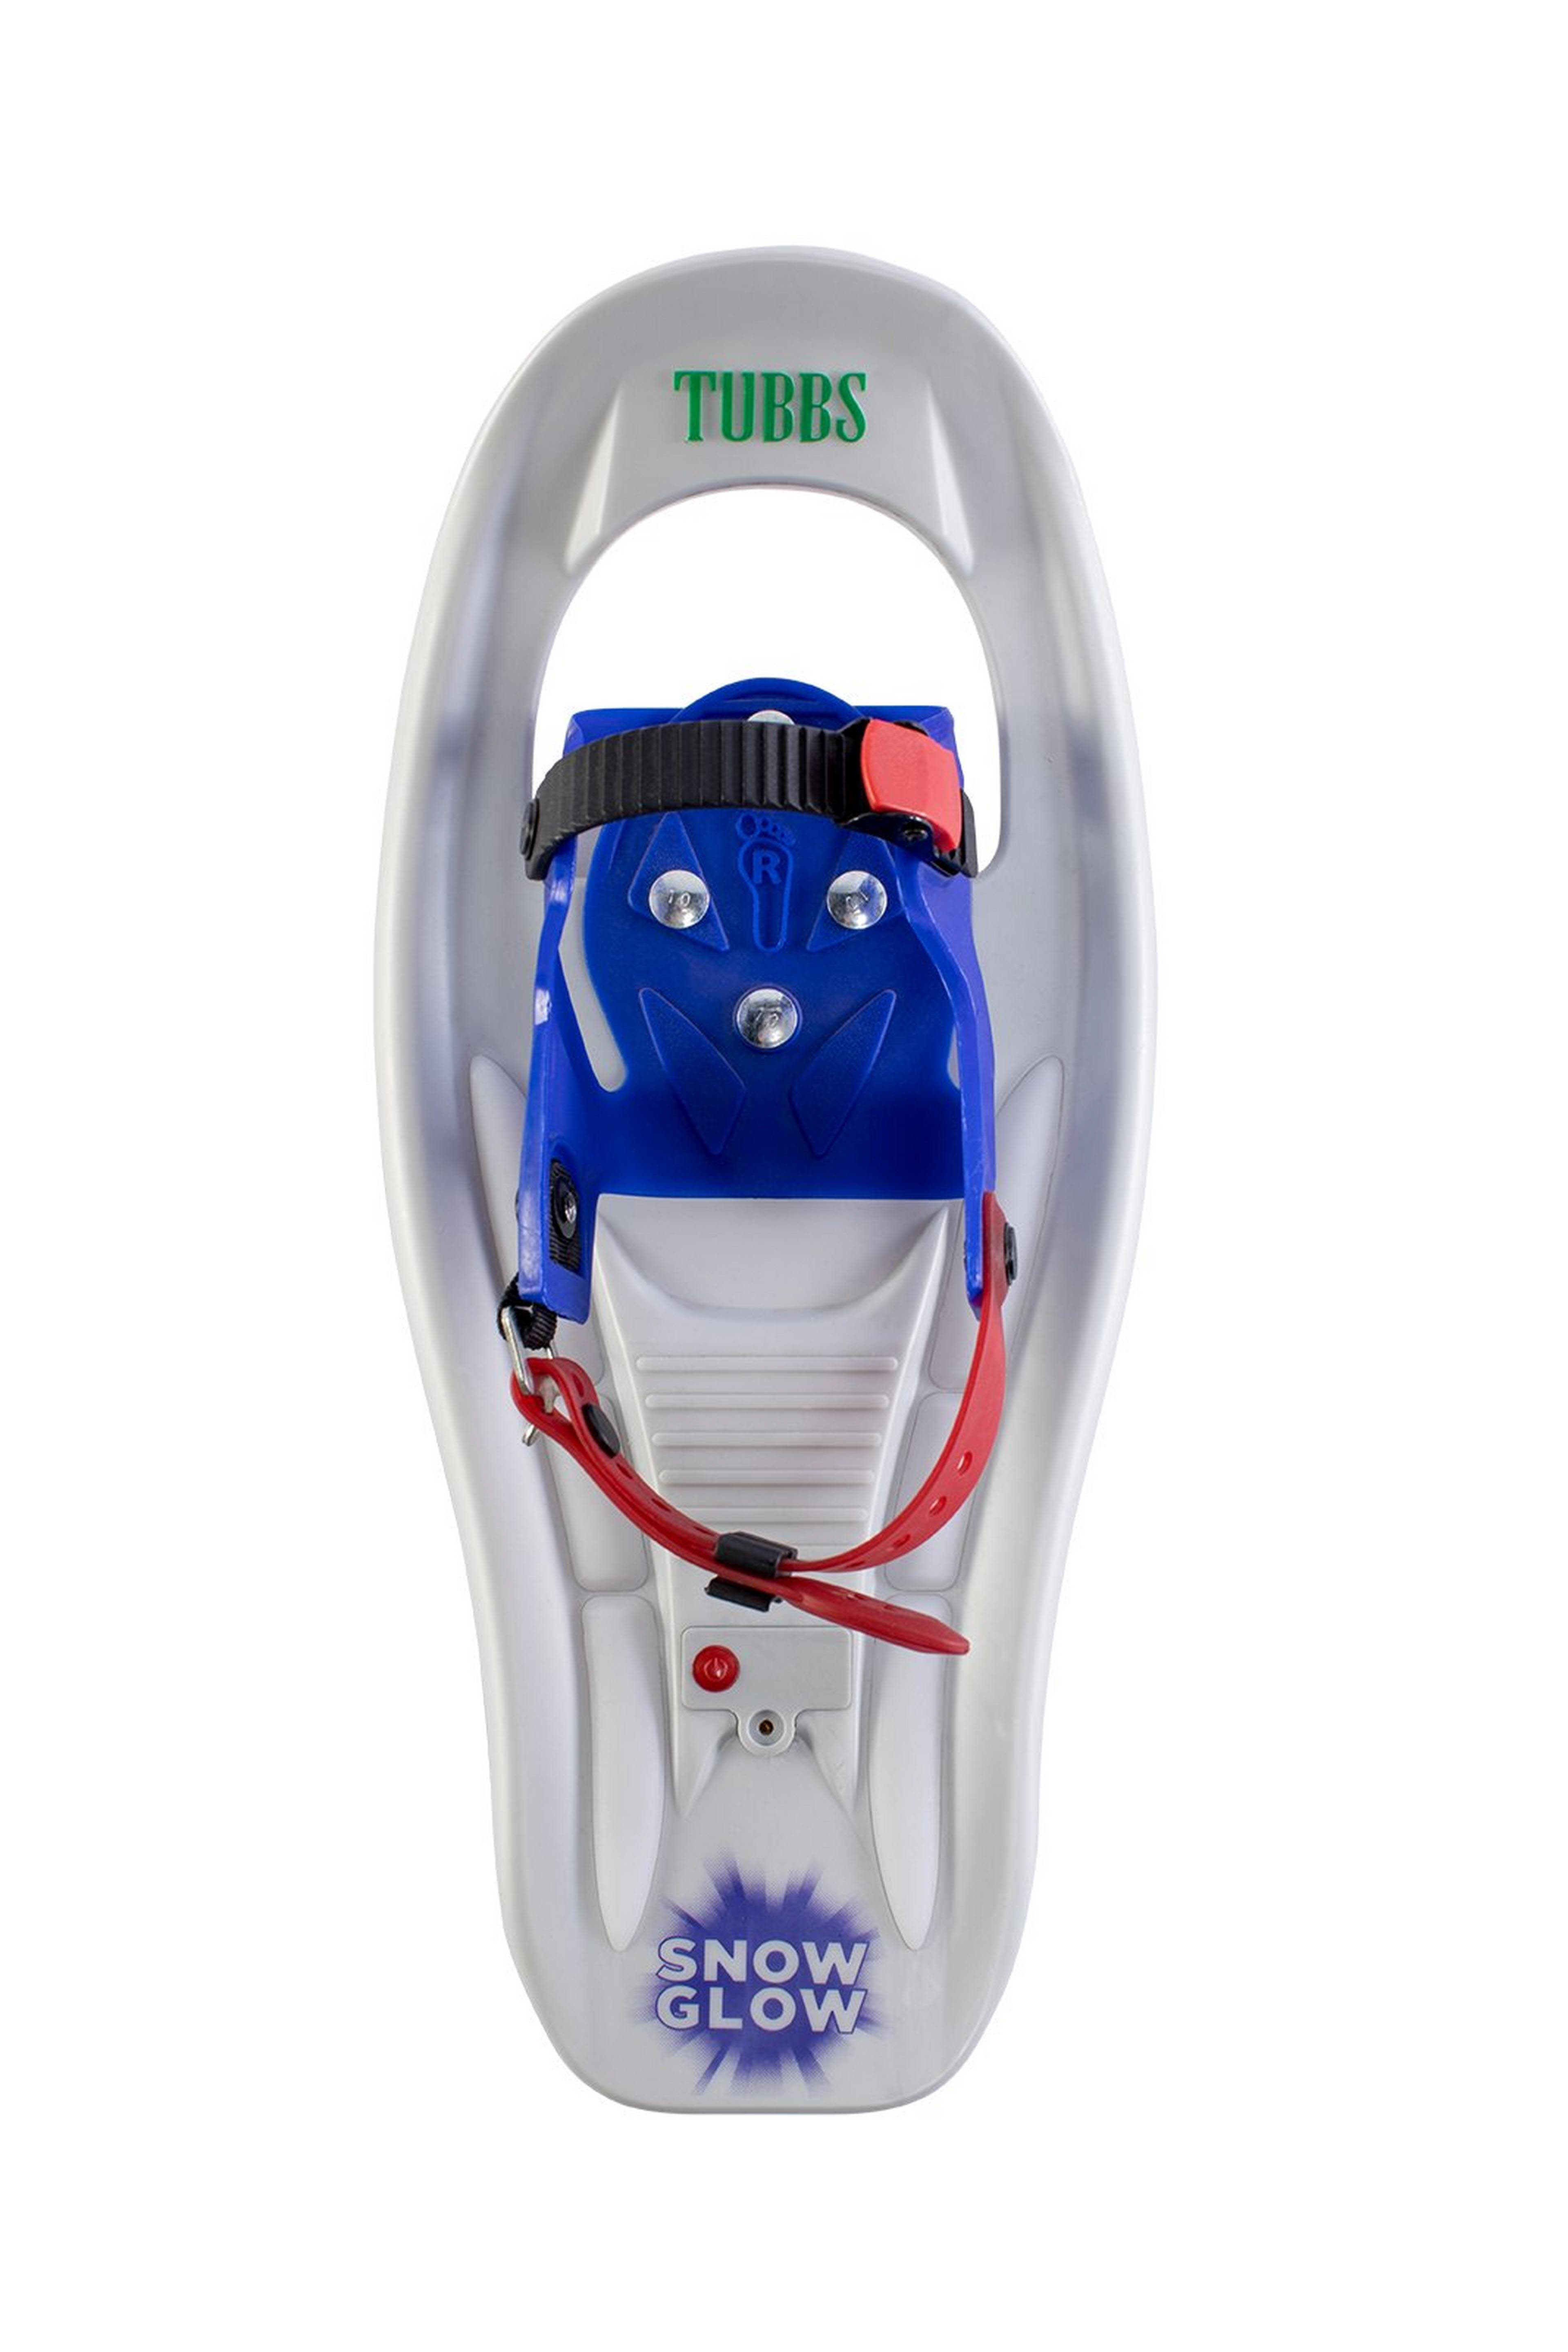 Tubbs Snowglow Kinder-Schneeschuhe Snowshoes 4-8 Jahre Unisex grau/blau NEU